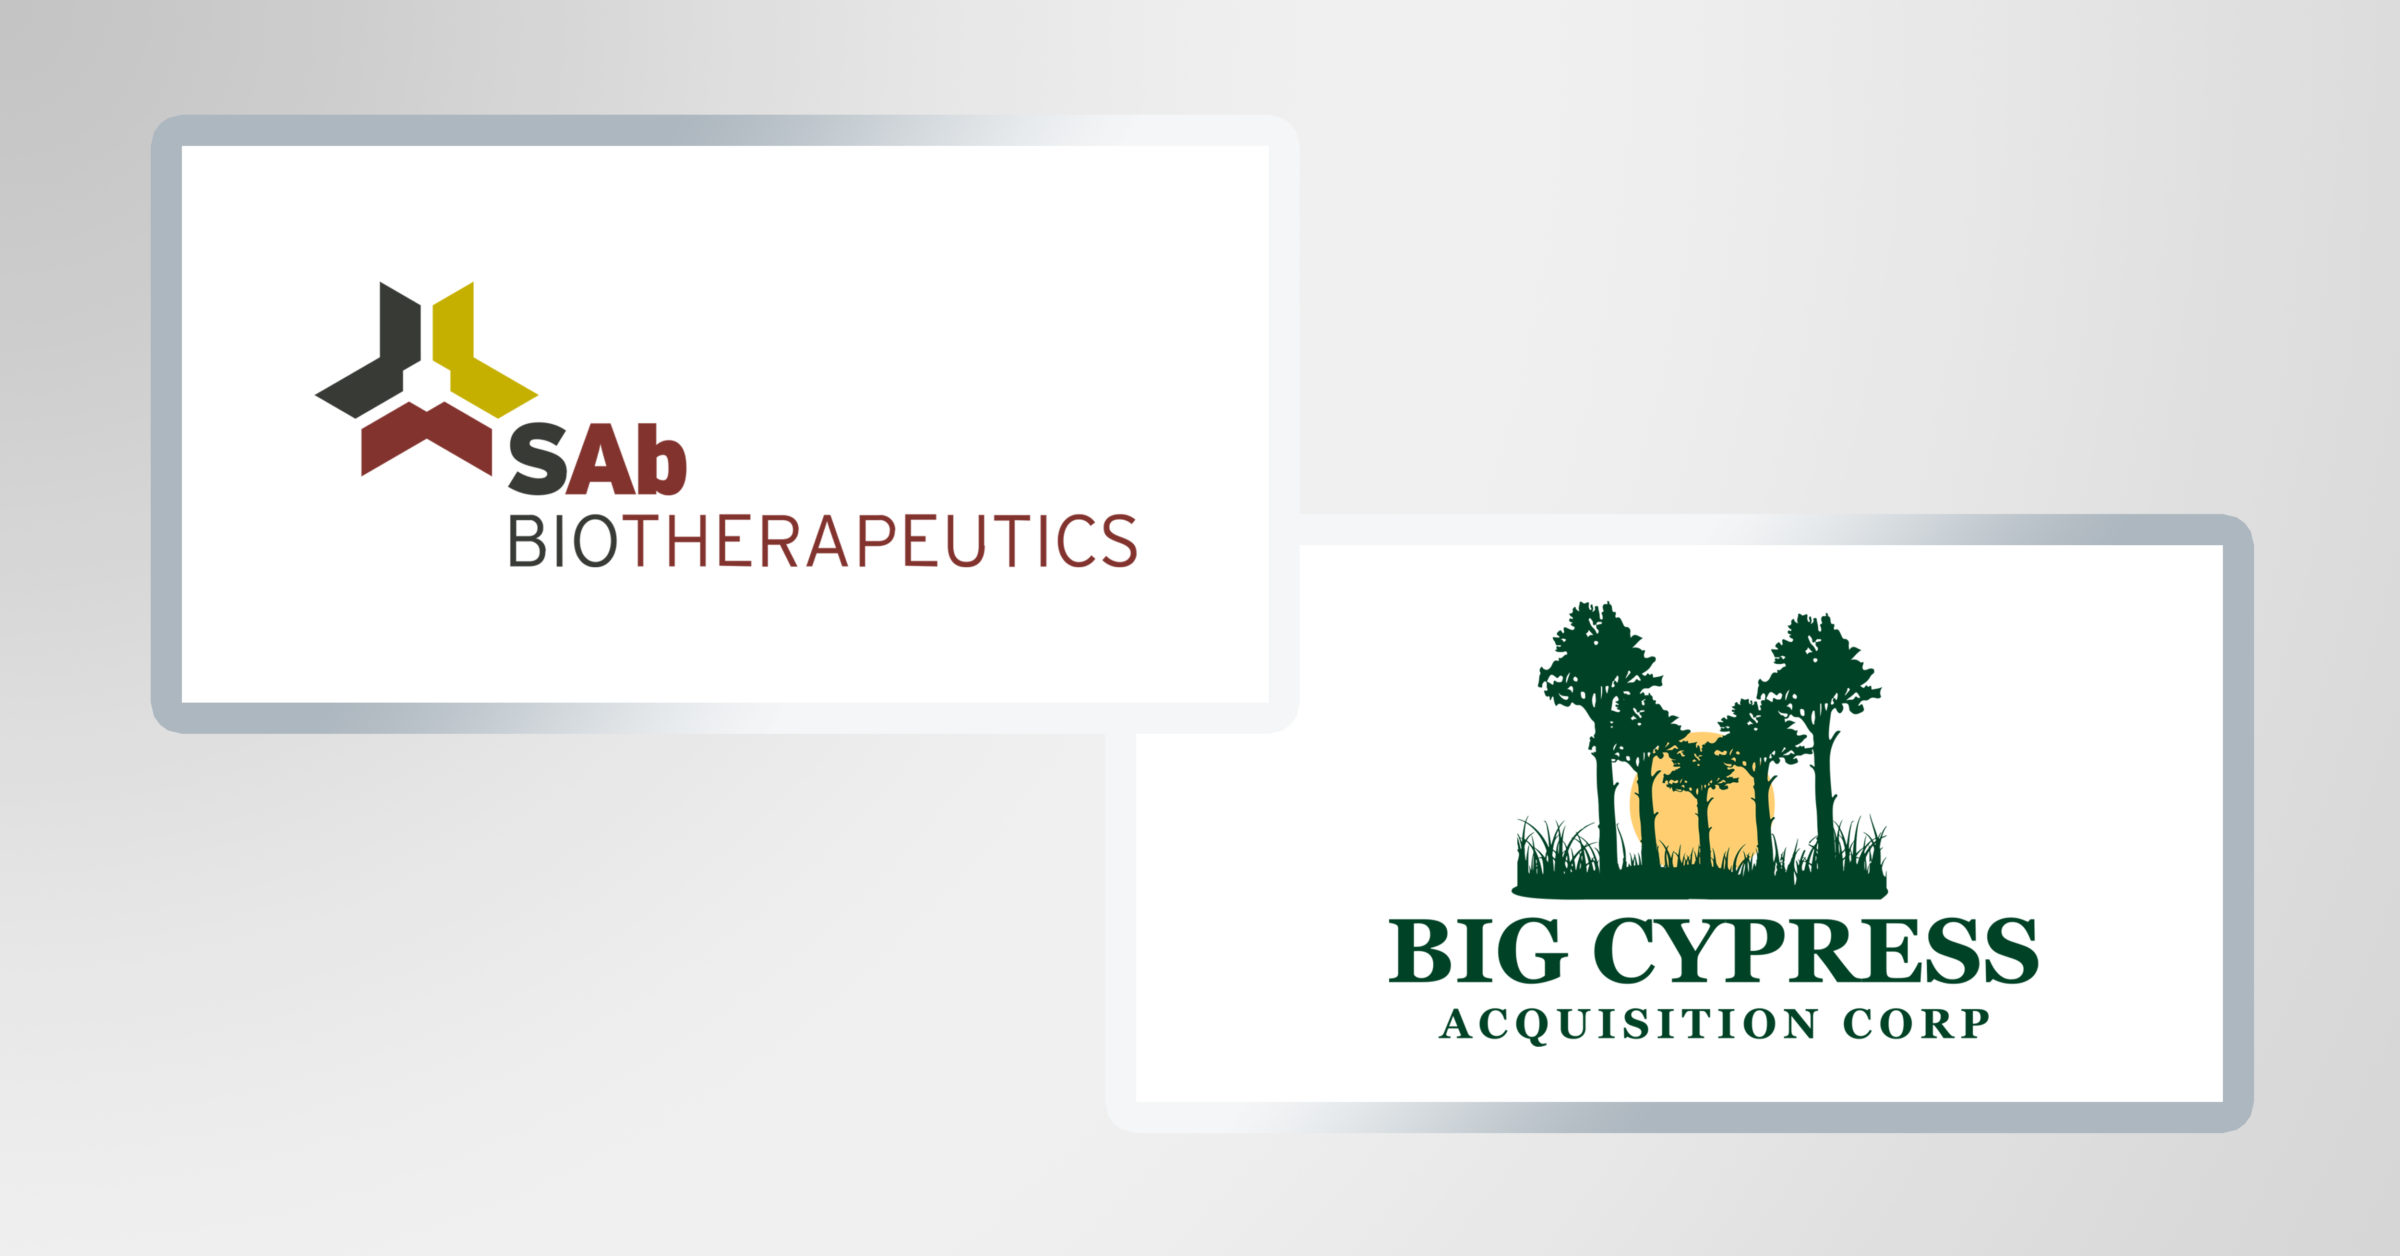 SAB Biotherapeutics to List on Nasdaq through Merger with Big Cypress Acquisition Corp.